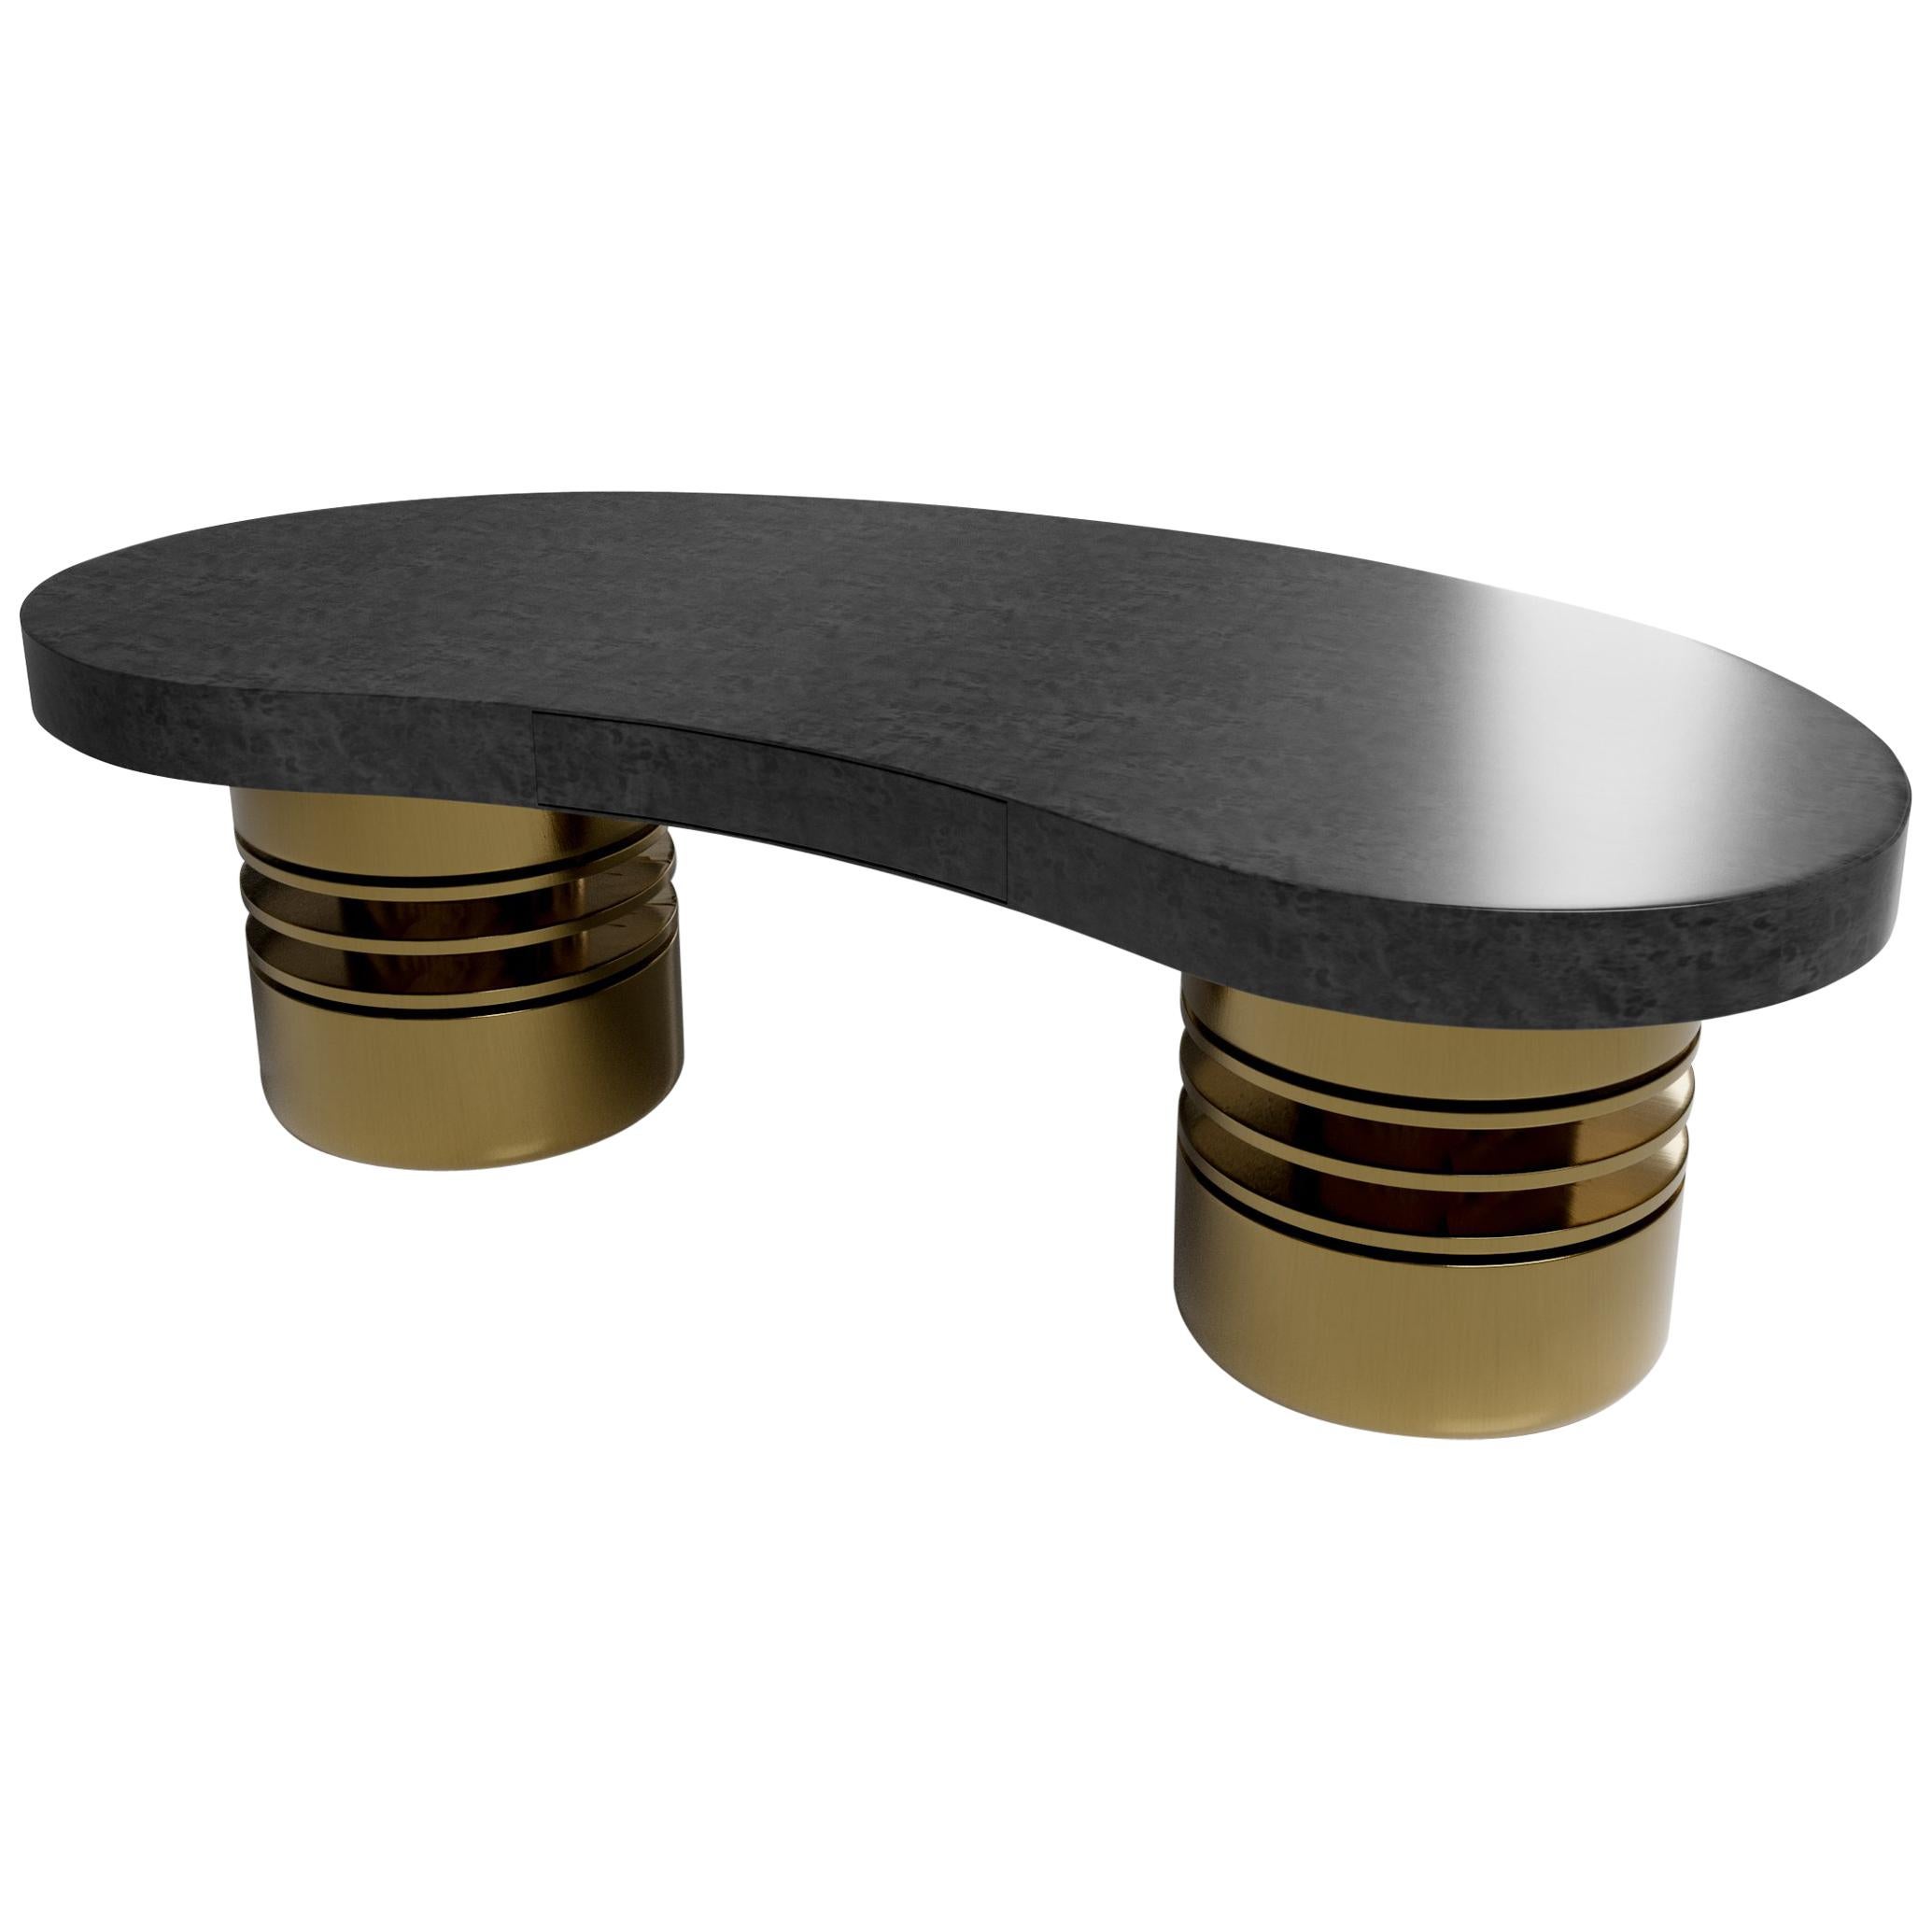 BOLSA DESK - Modern Wood Desk with a Dark Bronze Metallic Base